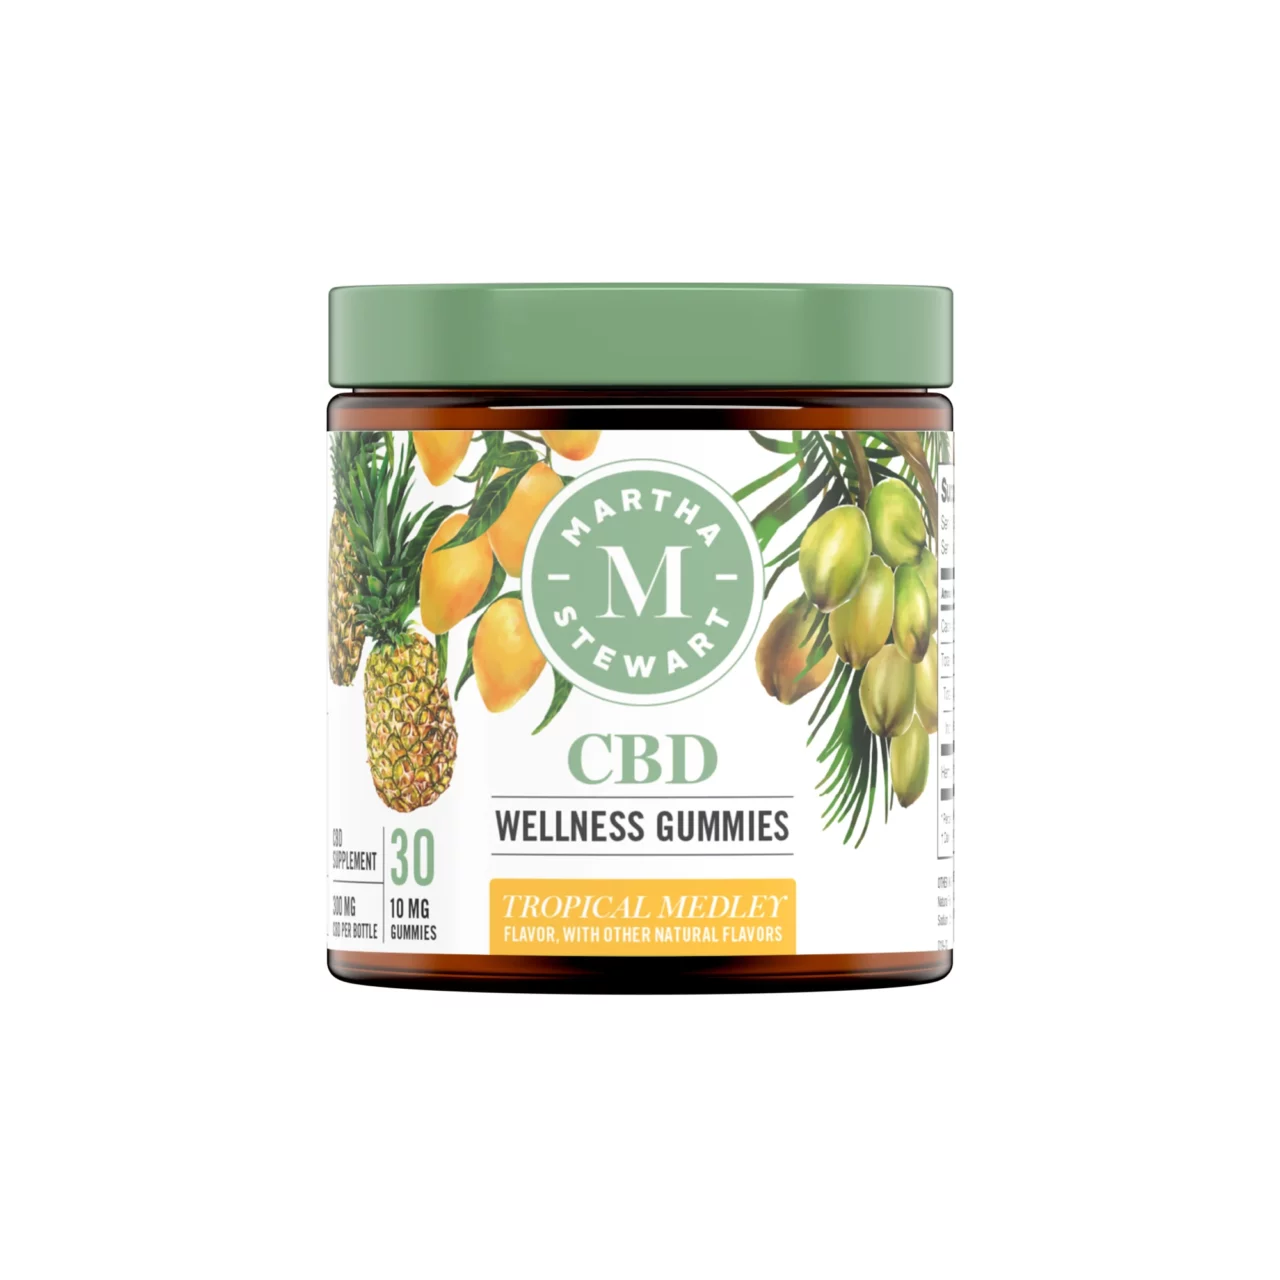 Martha Stewart CBD, Tropical Medley Wellness Gummies, Isolate THC-Free, 30ct, 300mg CBD 1